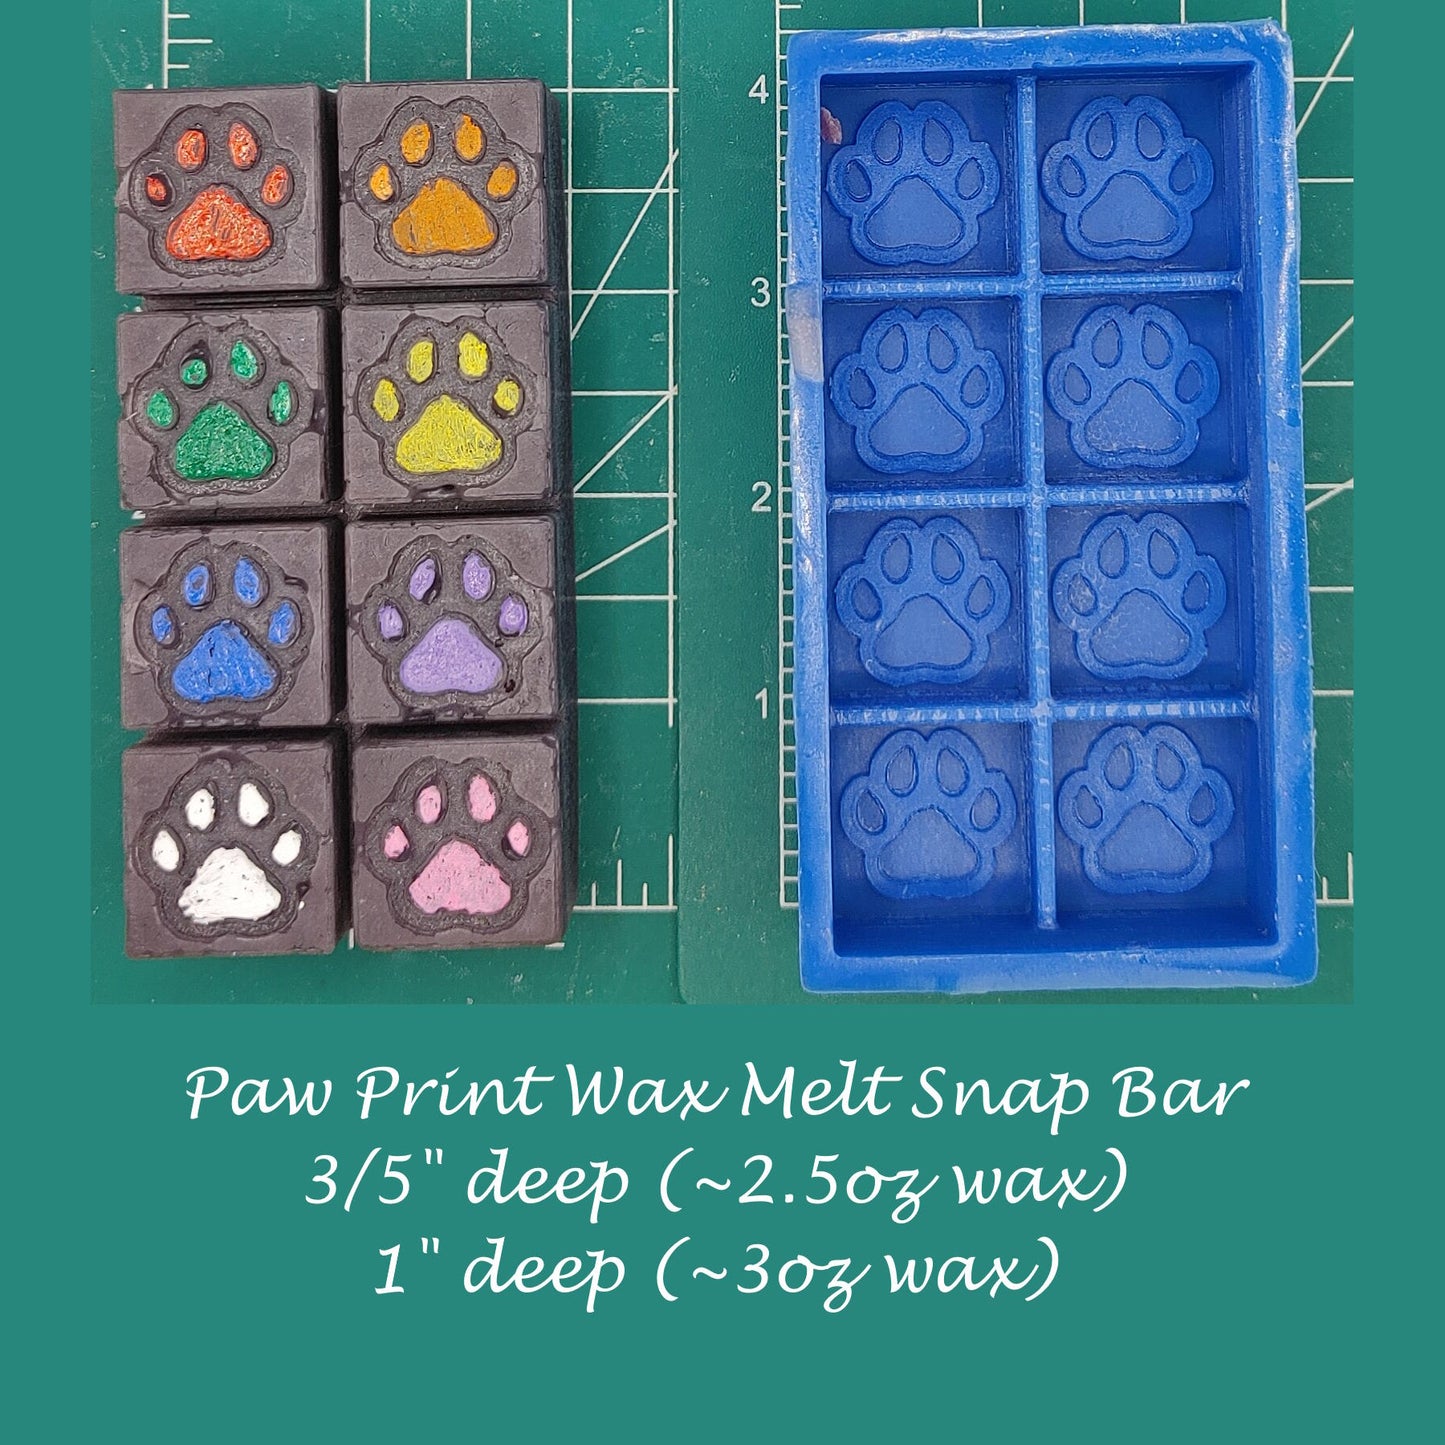 Paw Prints Wax Melt Snap Bar Silicone Mold